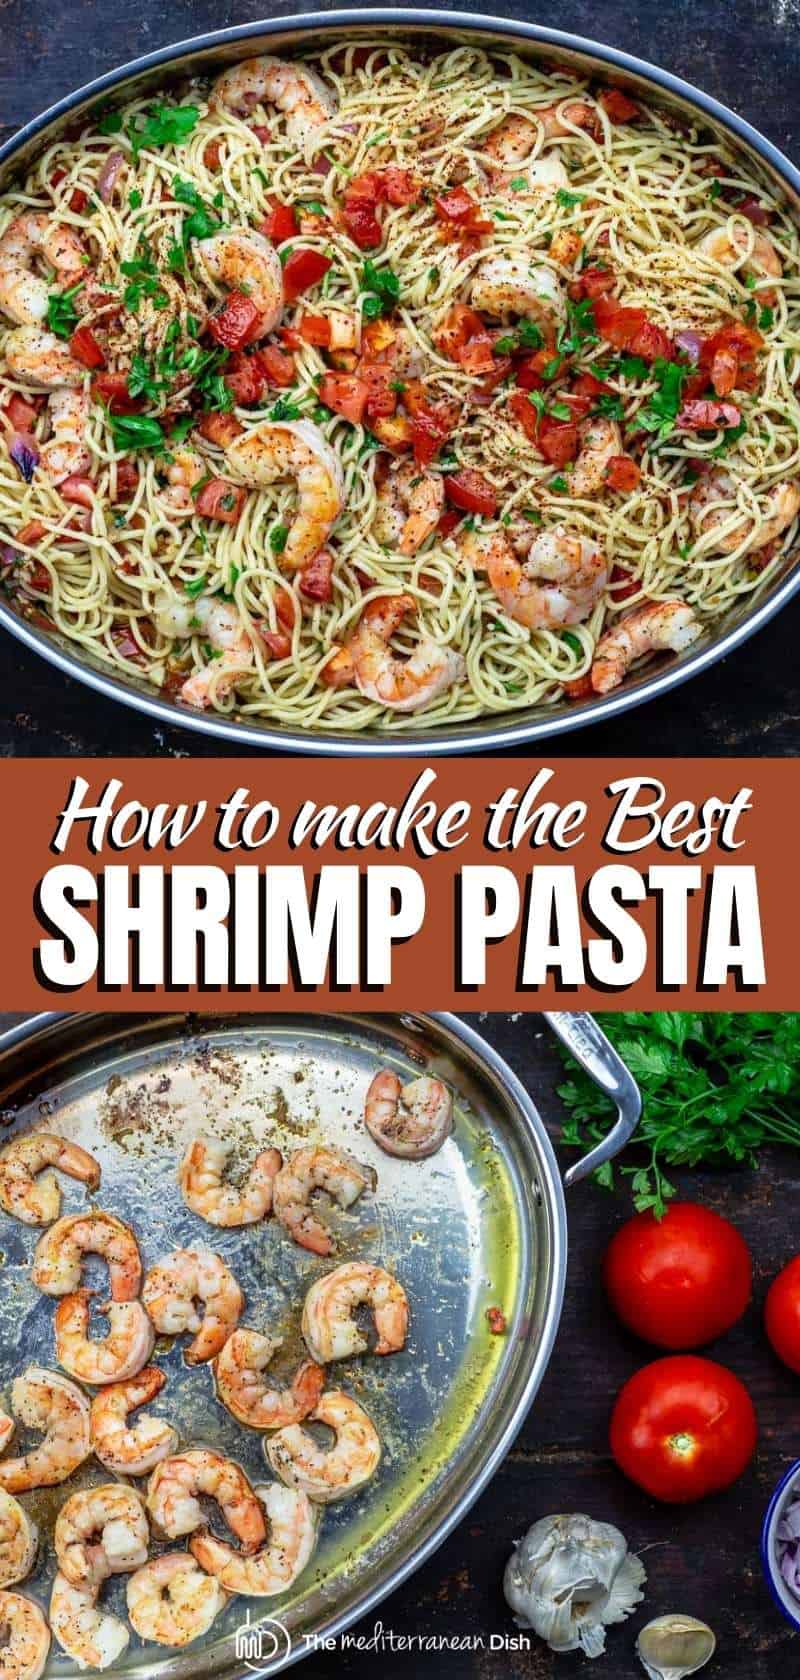 20-Minute Shrimp Pasta, Mediterranean-Style | The Mediterranean Dish